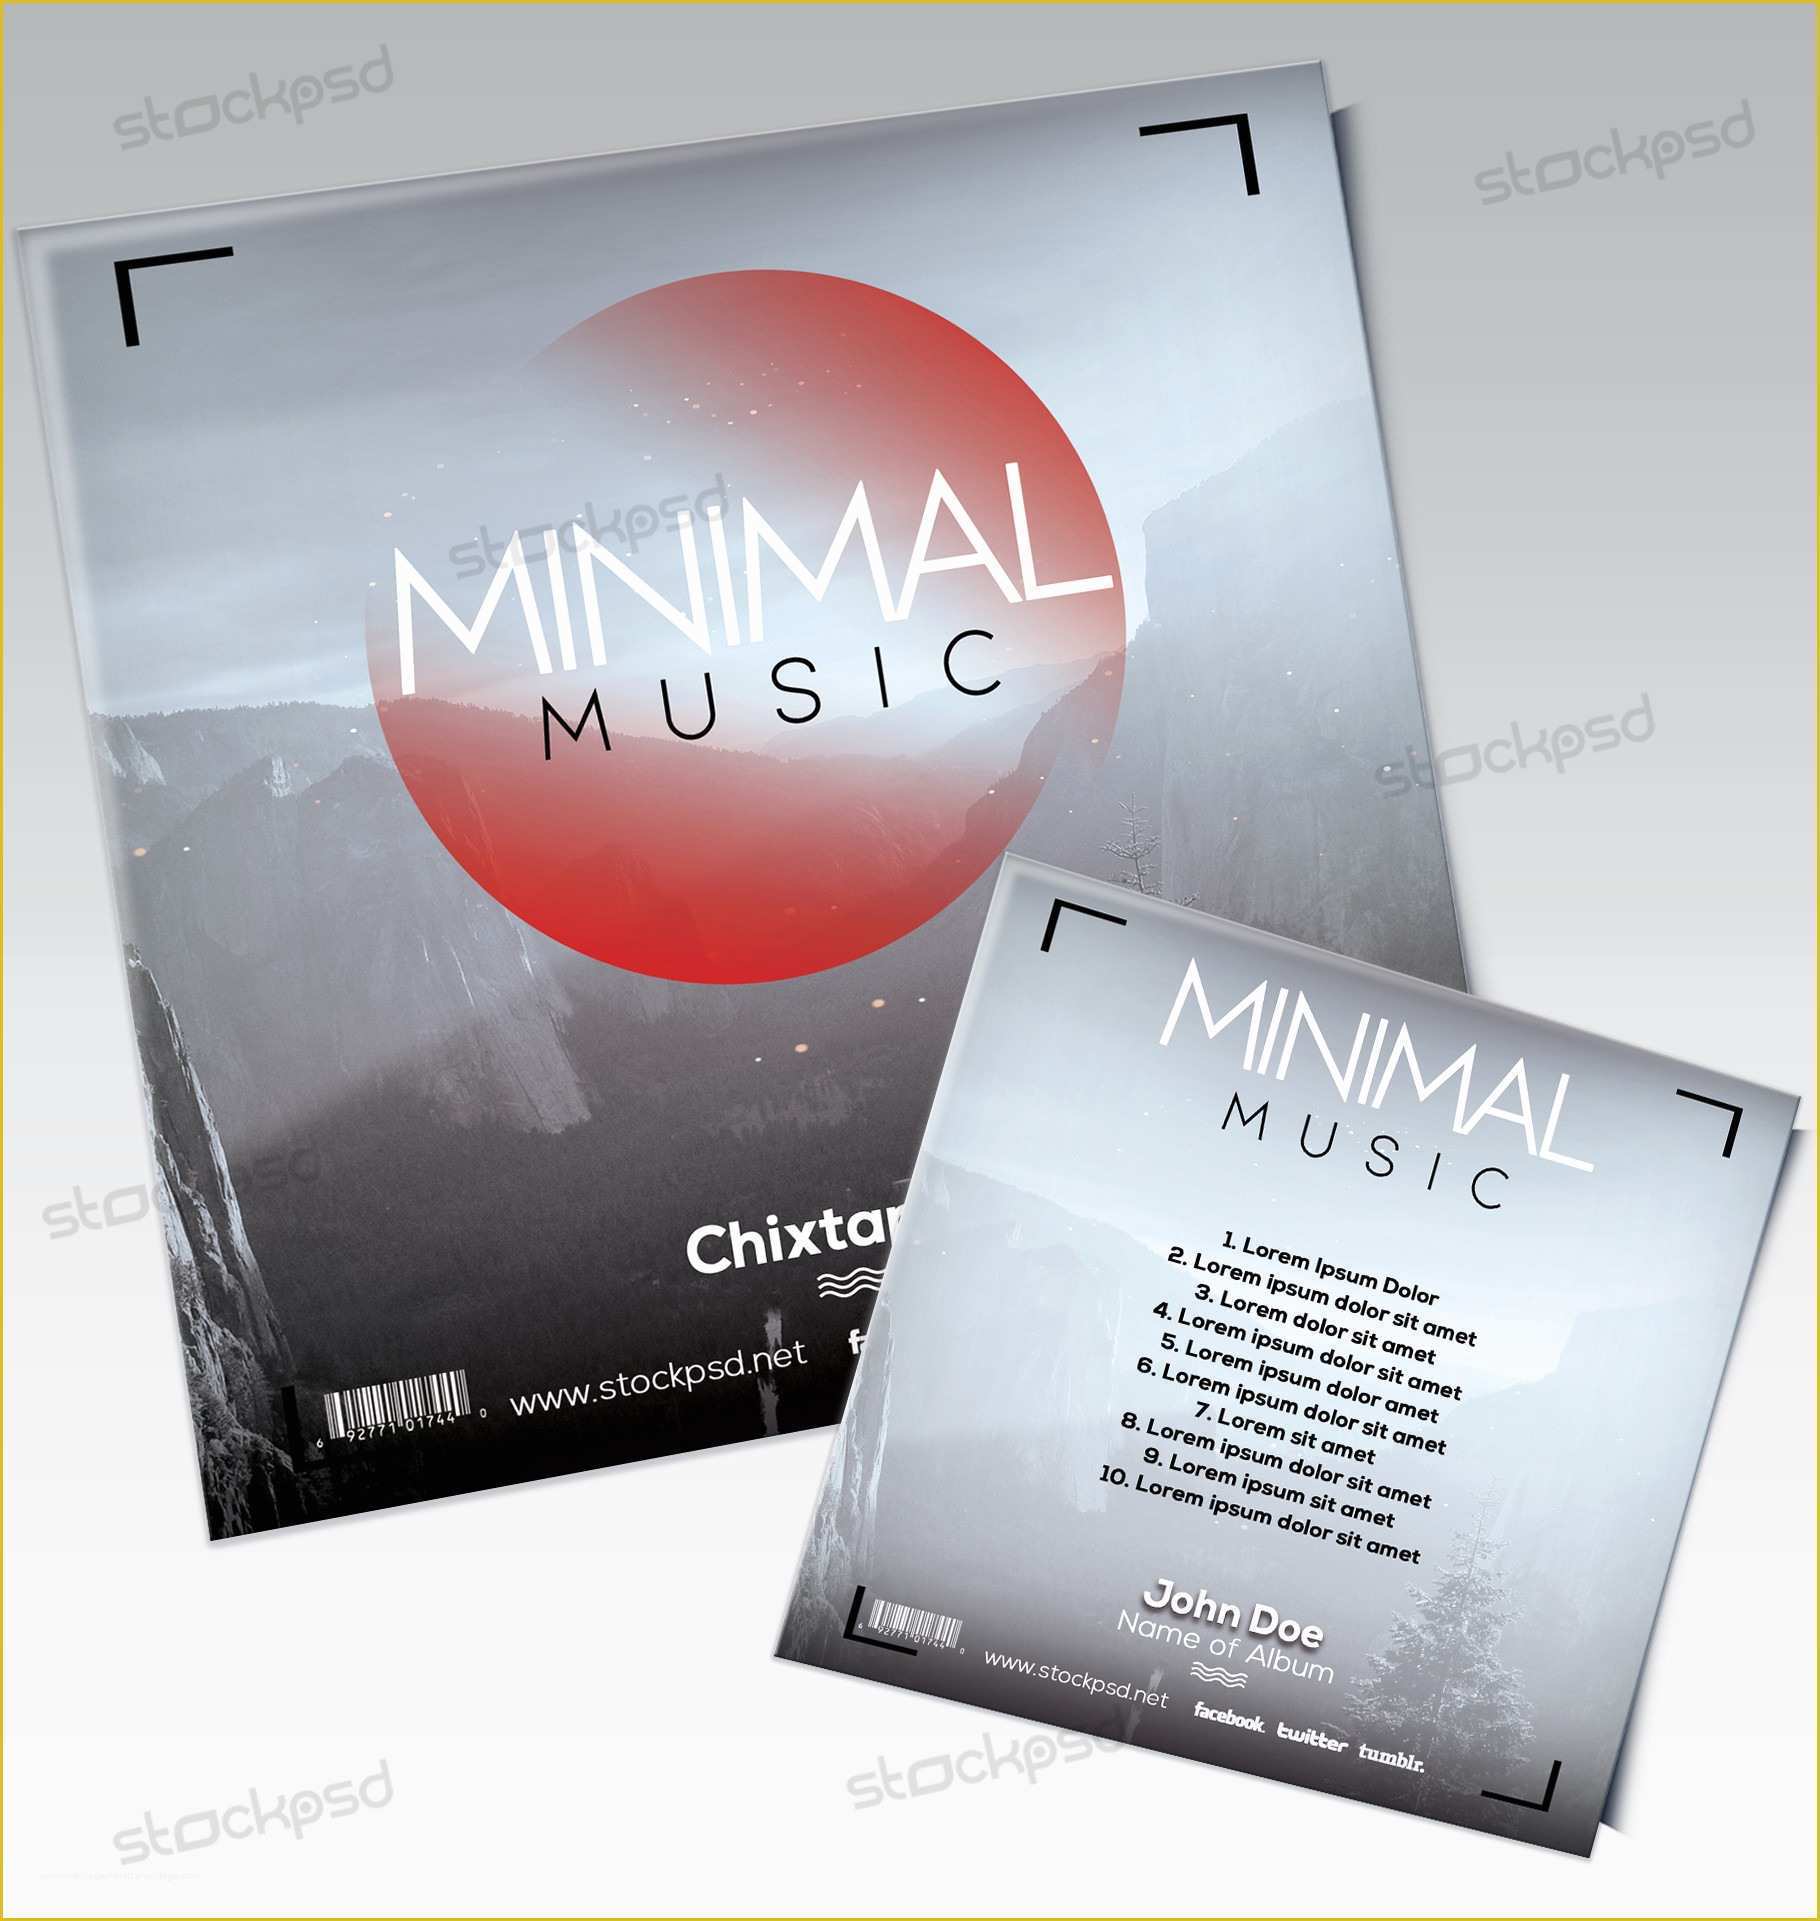 Free Mixtape Templates Of Minimal Music Mixtape Cover Artwork Psd Template Free